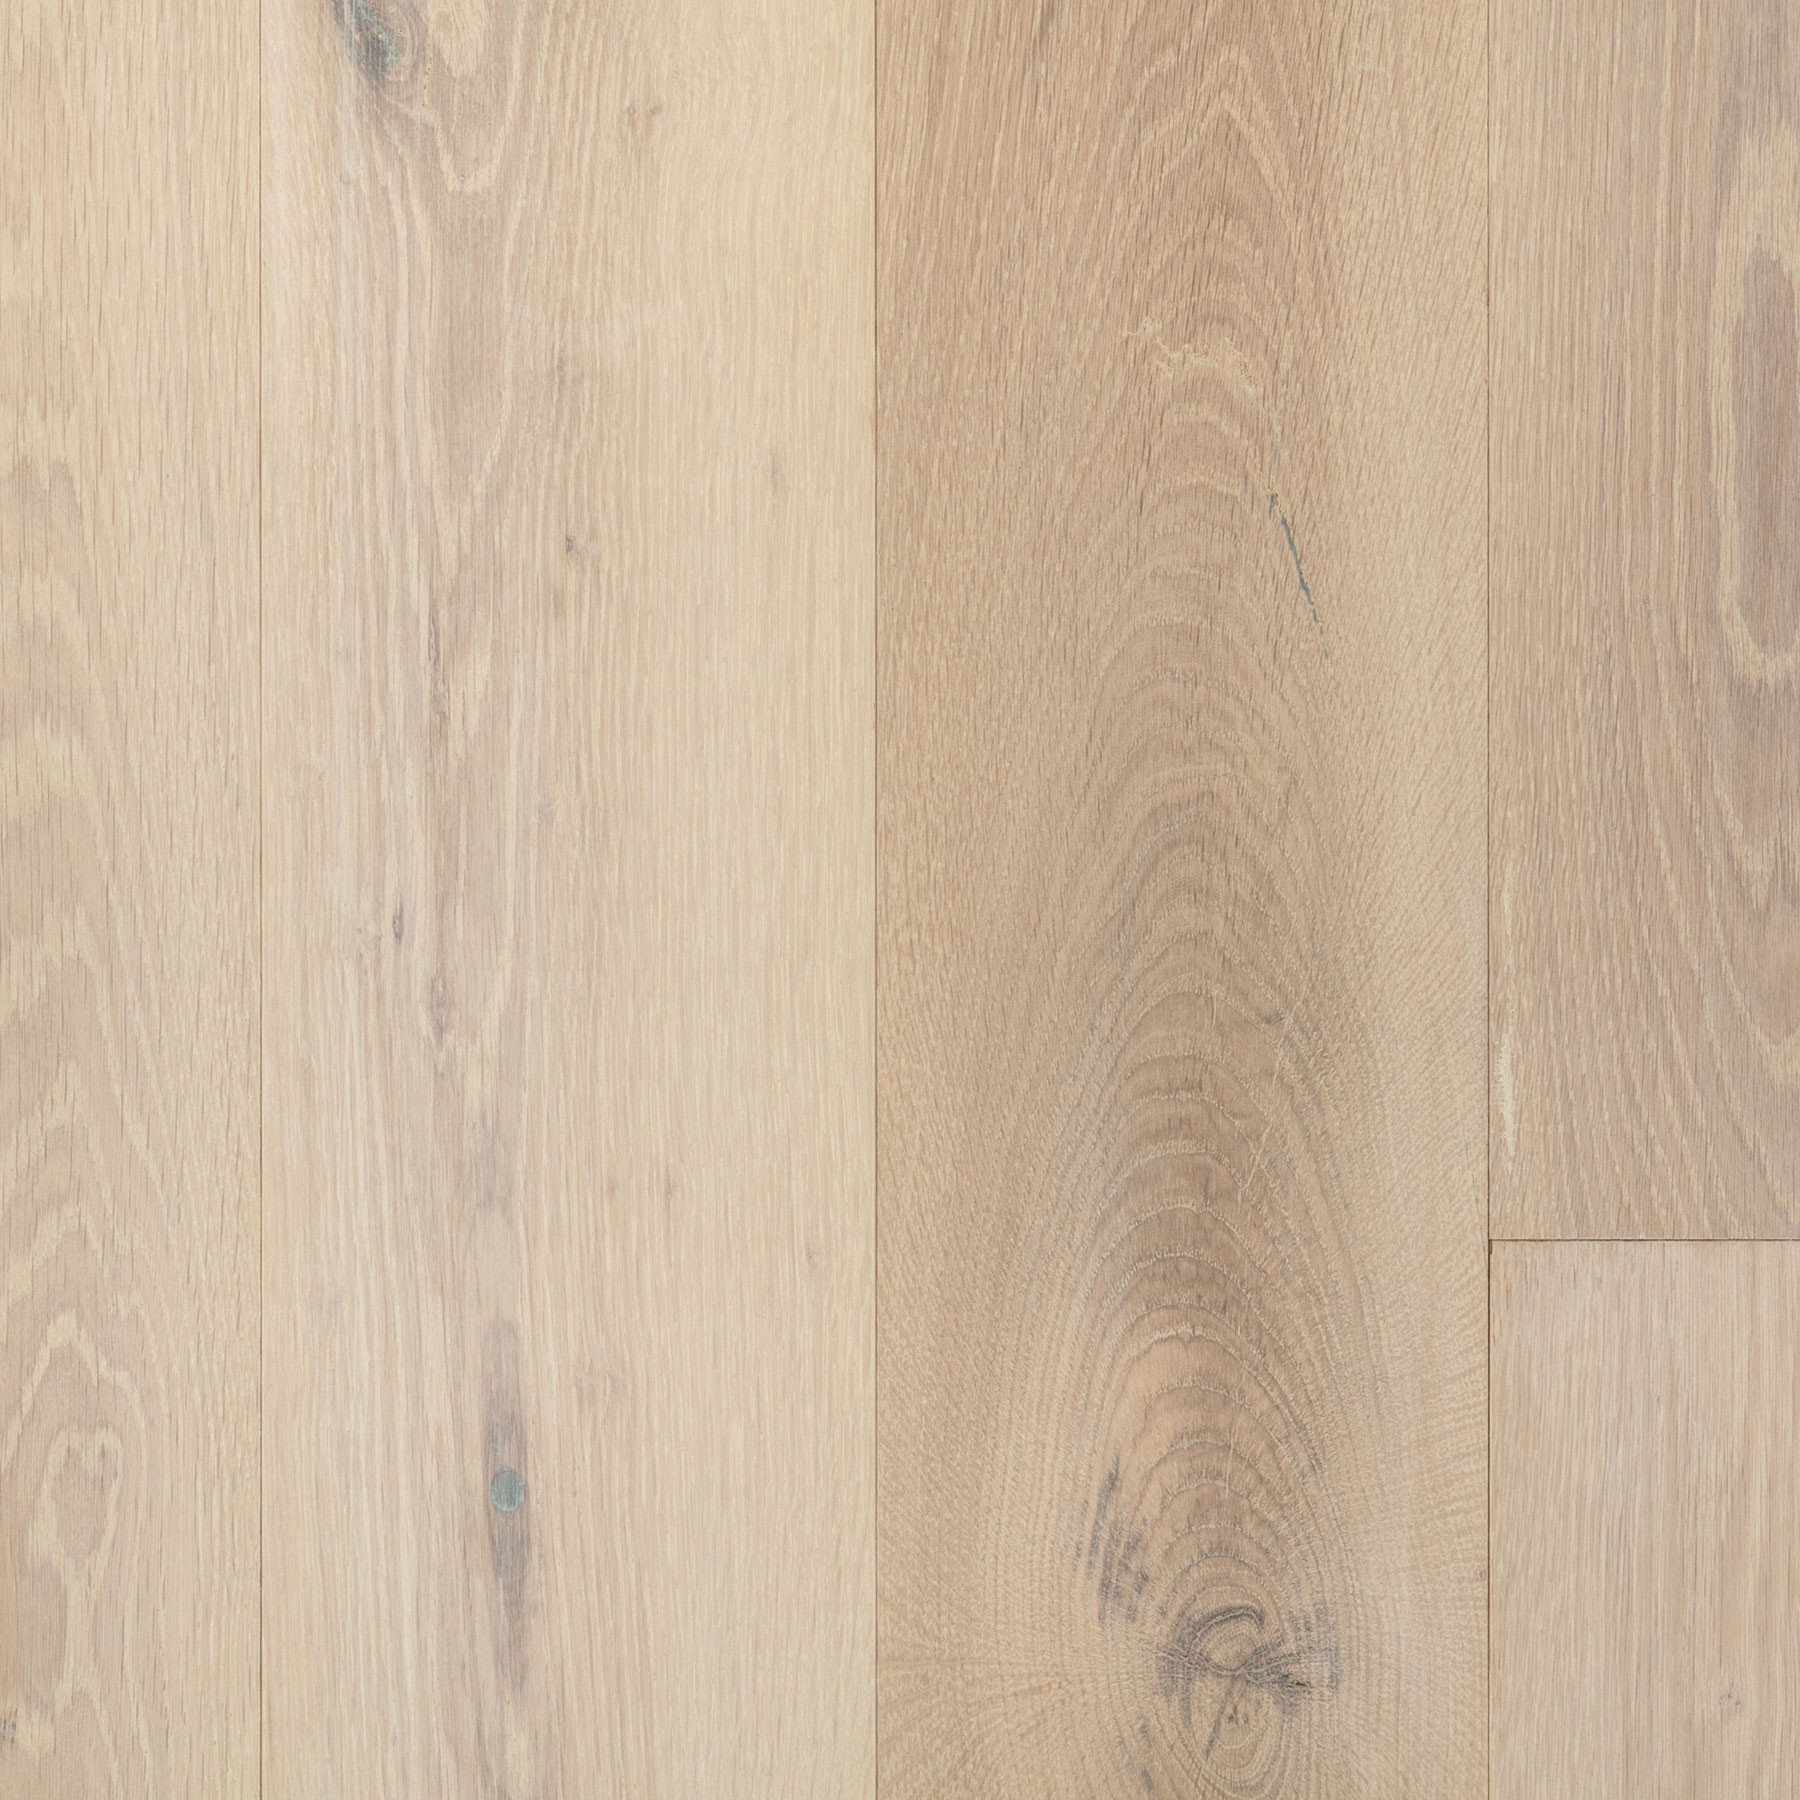 carbonized bamboo hardwood flooring of signature white oak arctic etx surfaces with regard to signature